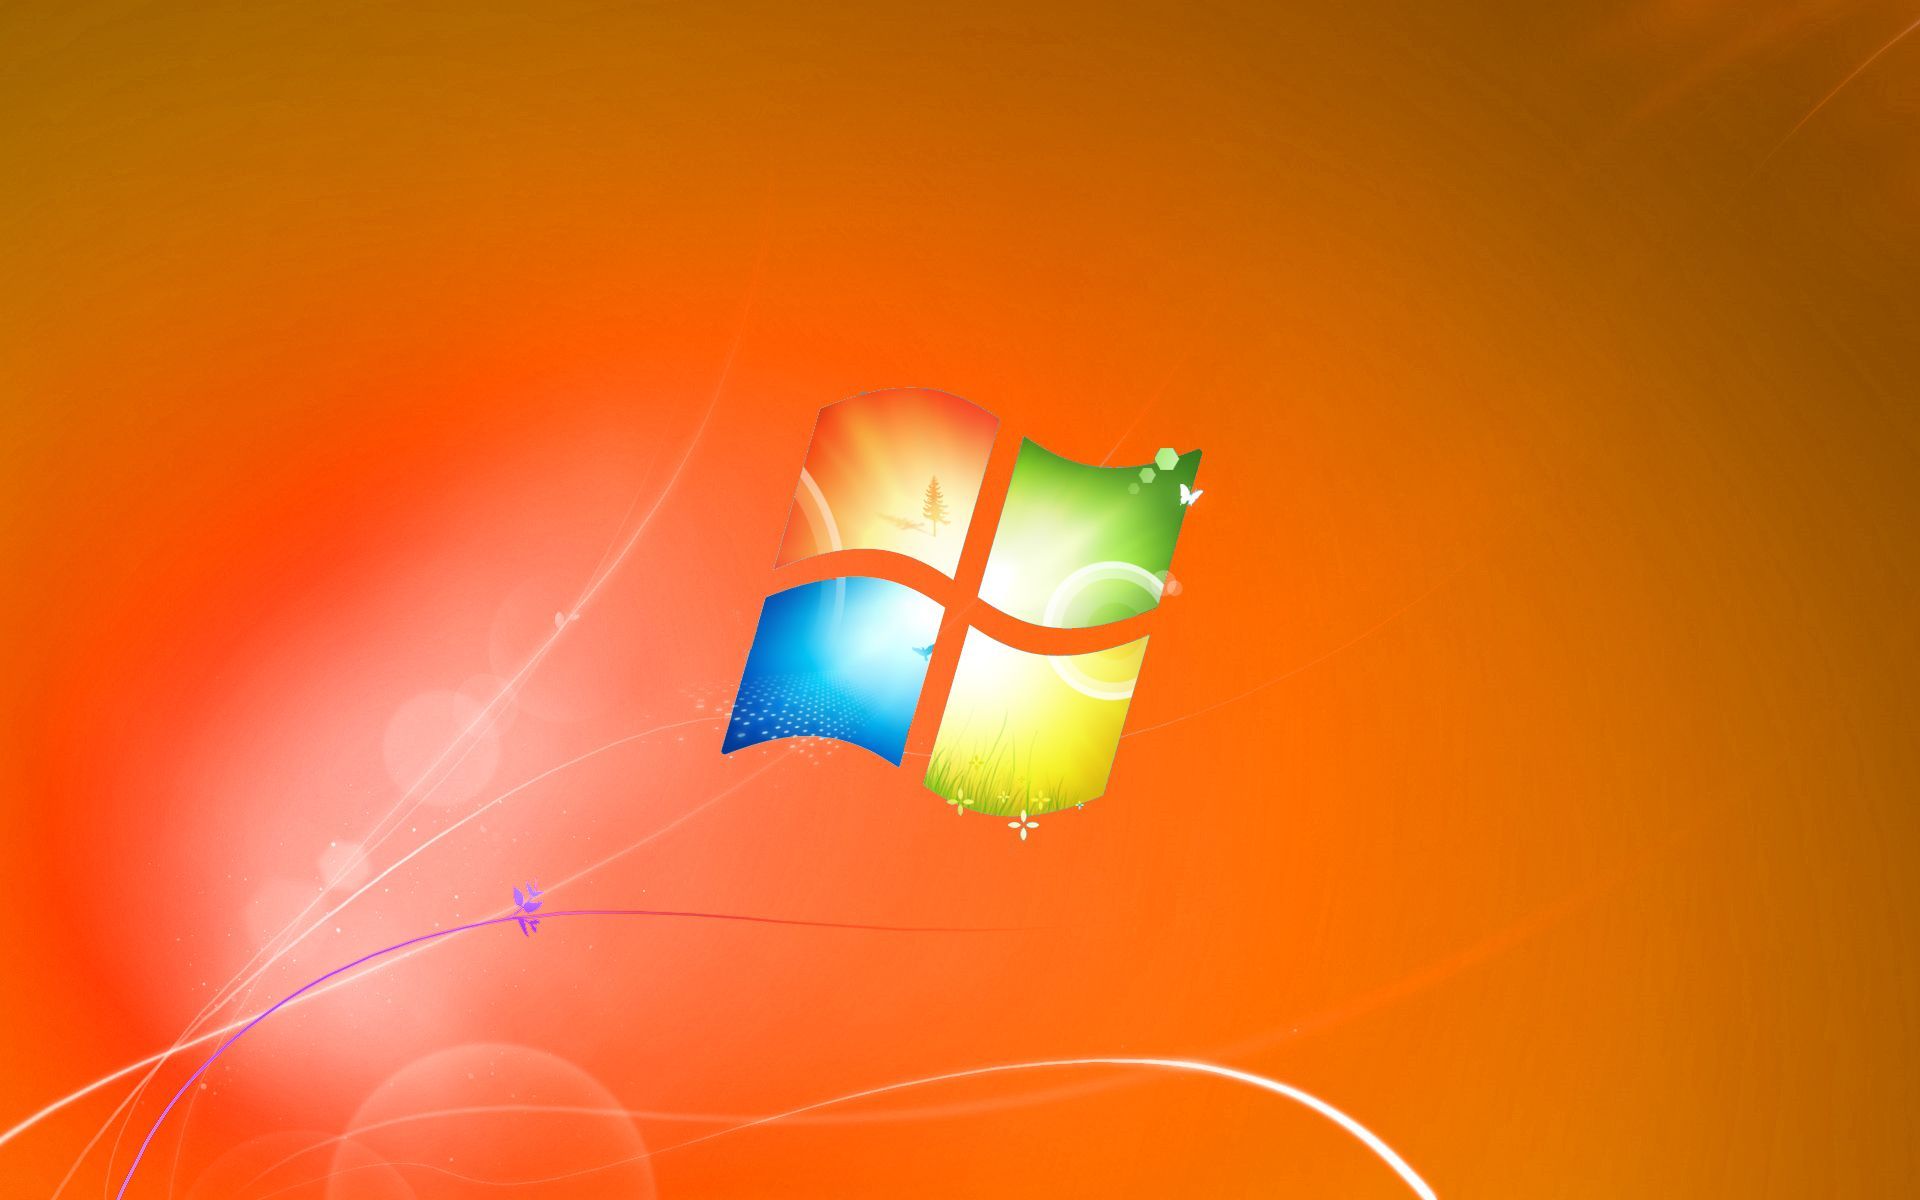 Windows 7 fondo de pantalla predeterminado versión naranja por dominichulme